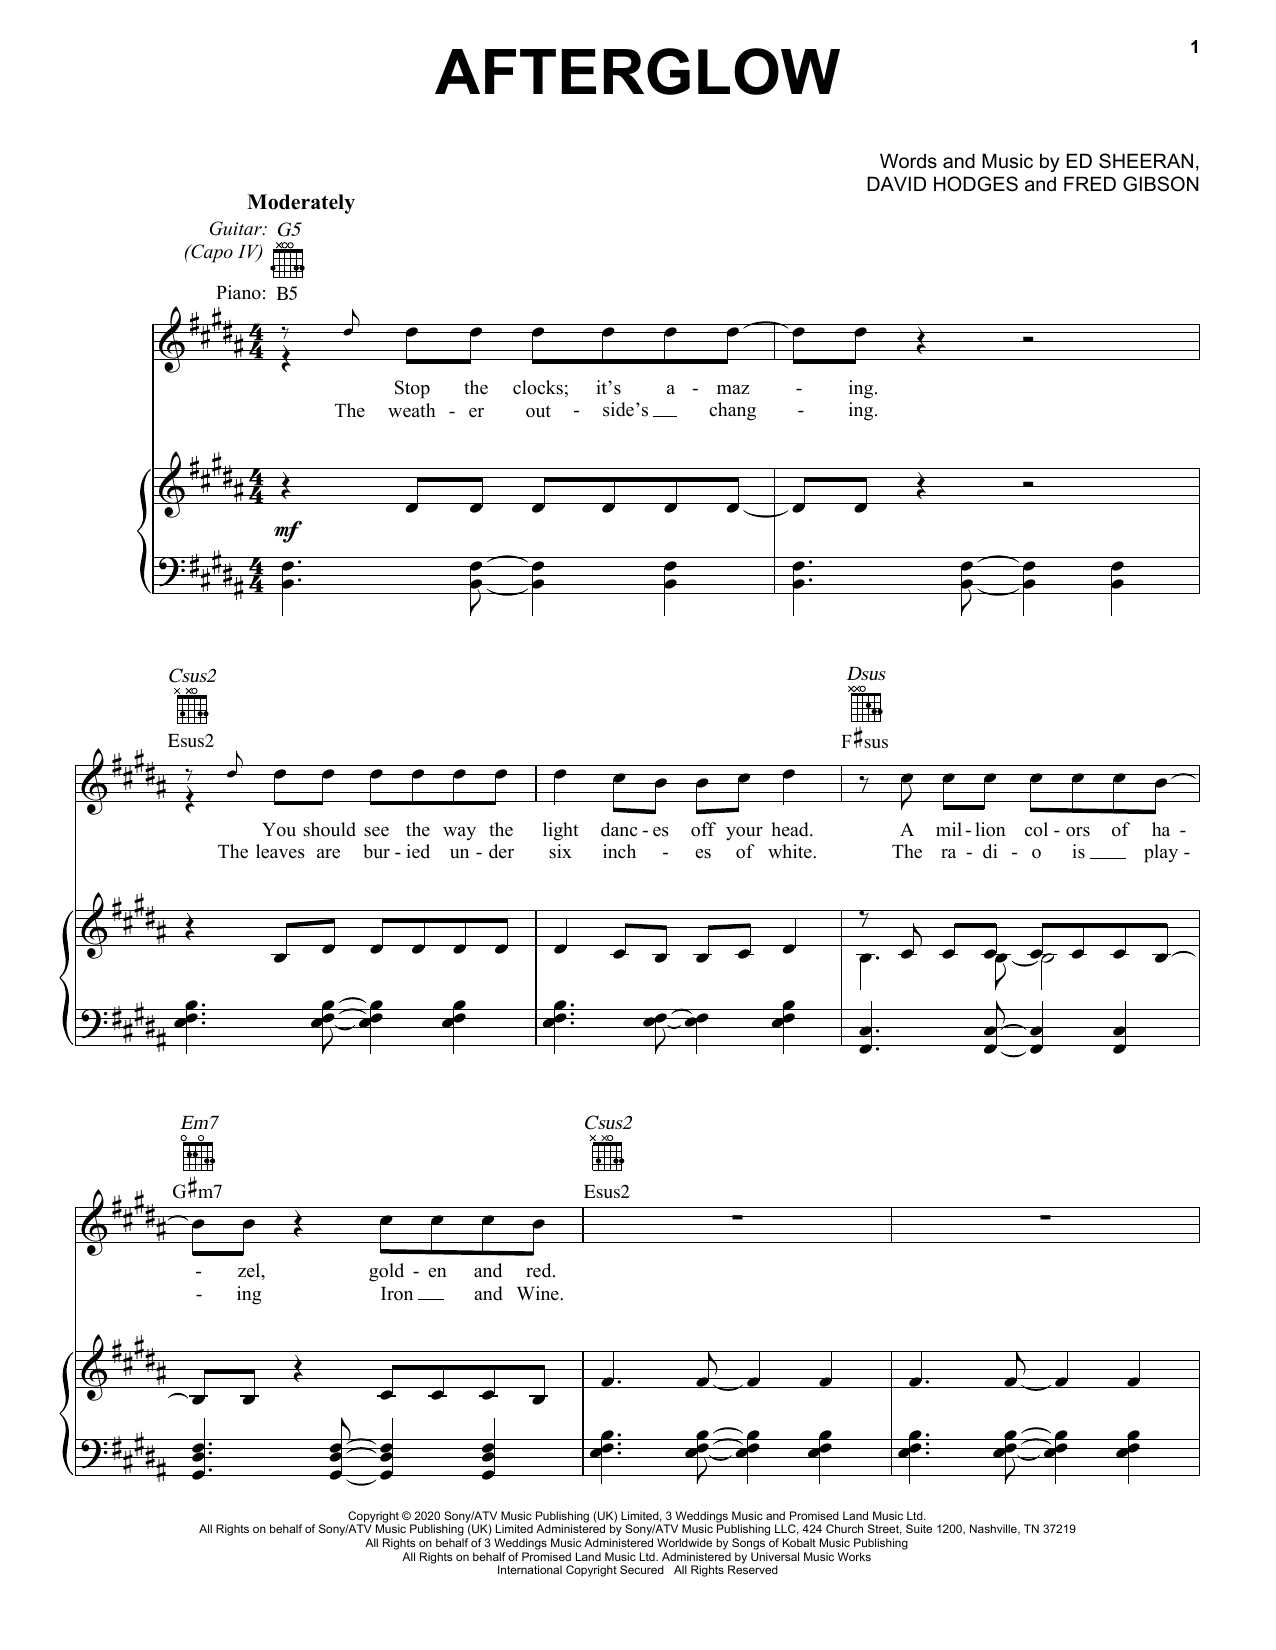 Ed Sheeran Afterglow Sheet Music Notes & Chords for Violin Duet - Download or Print PDF